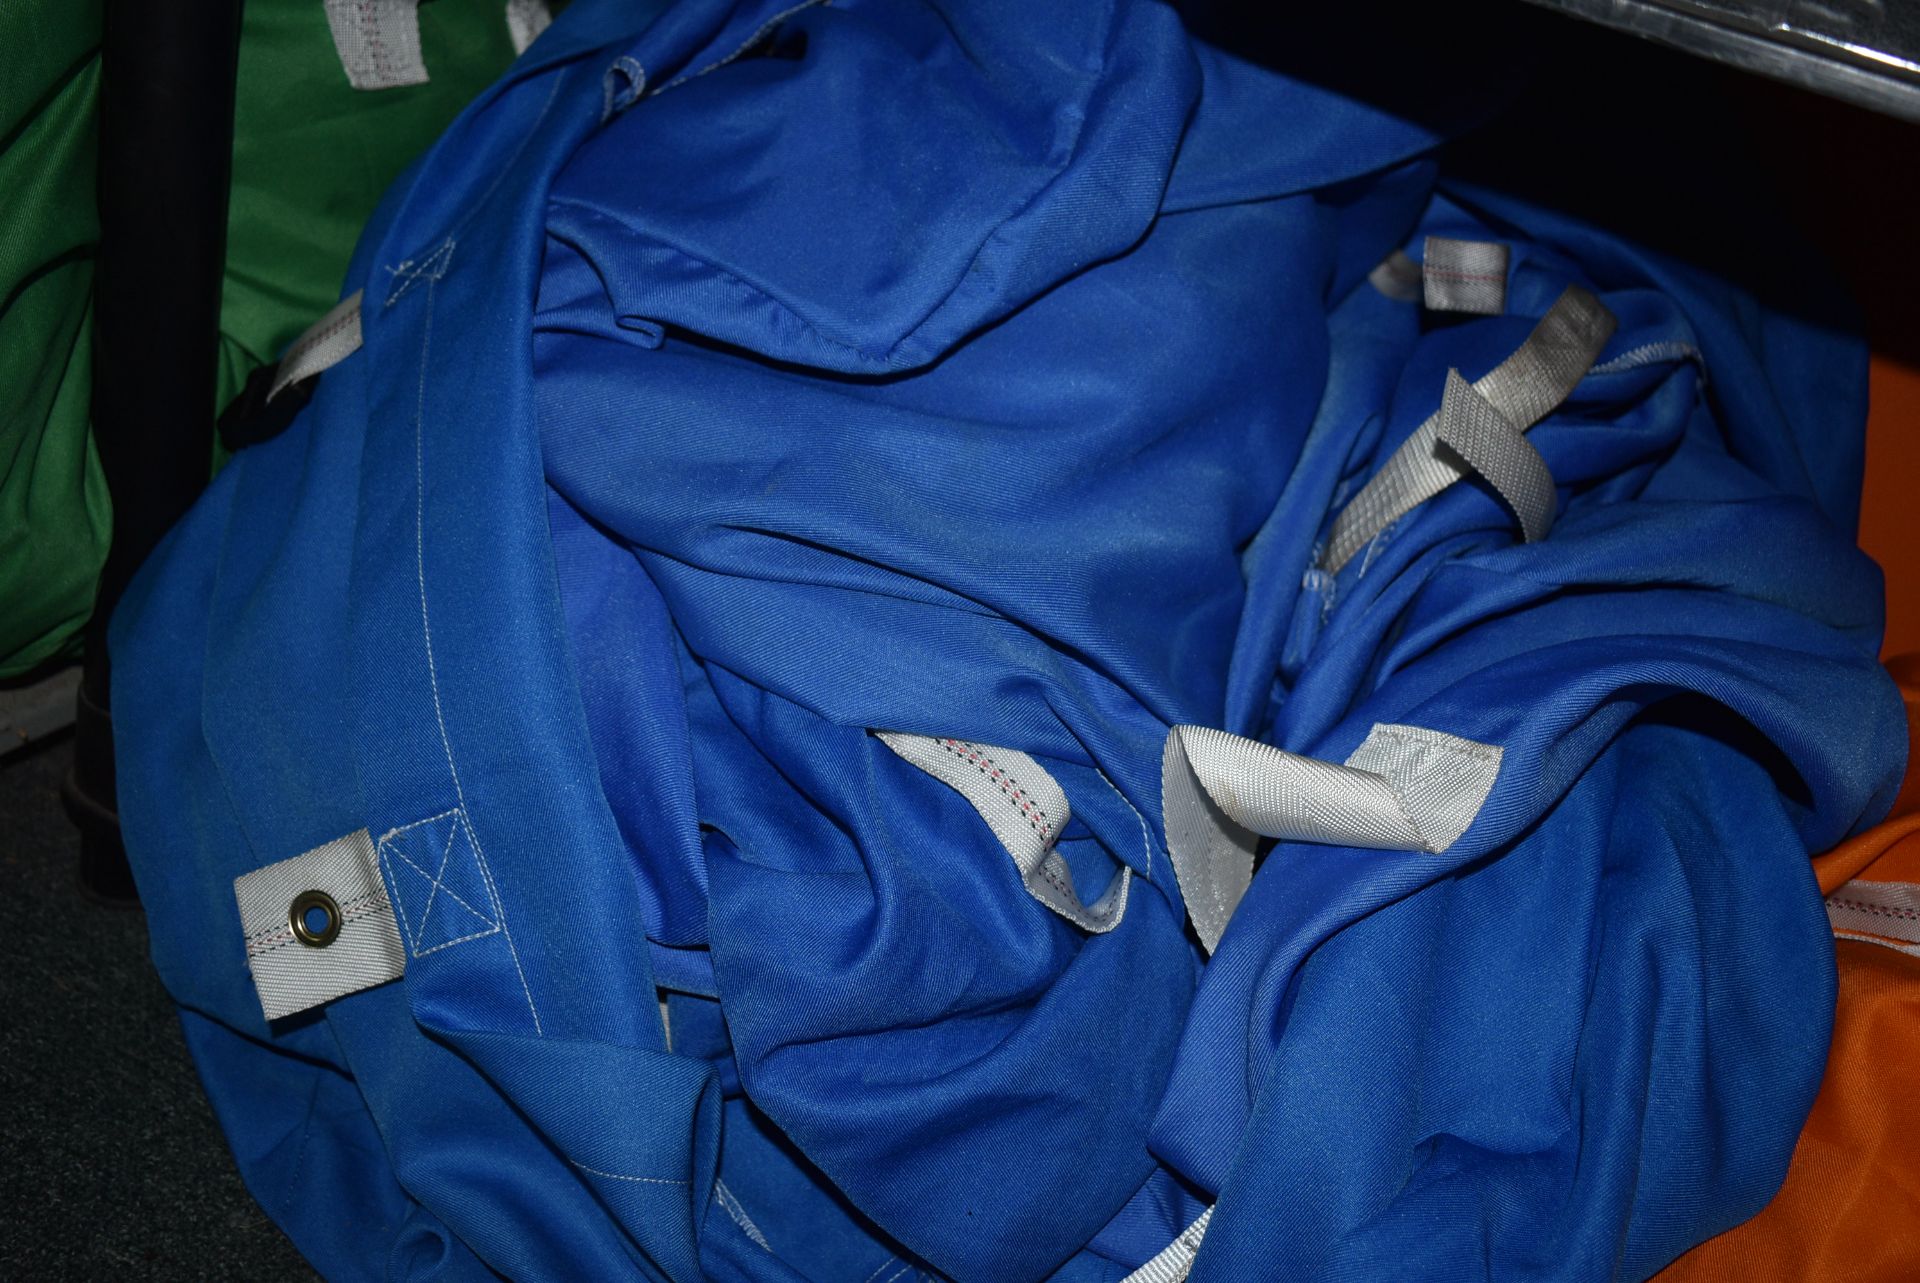 *Twelve Blue Laundry Bags